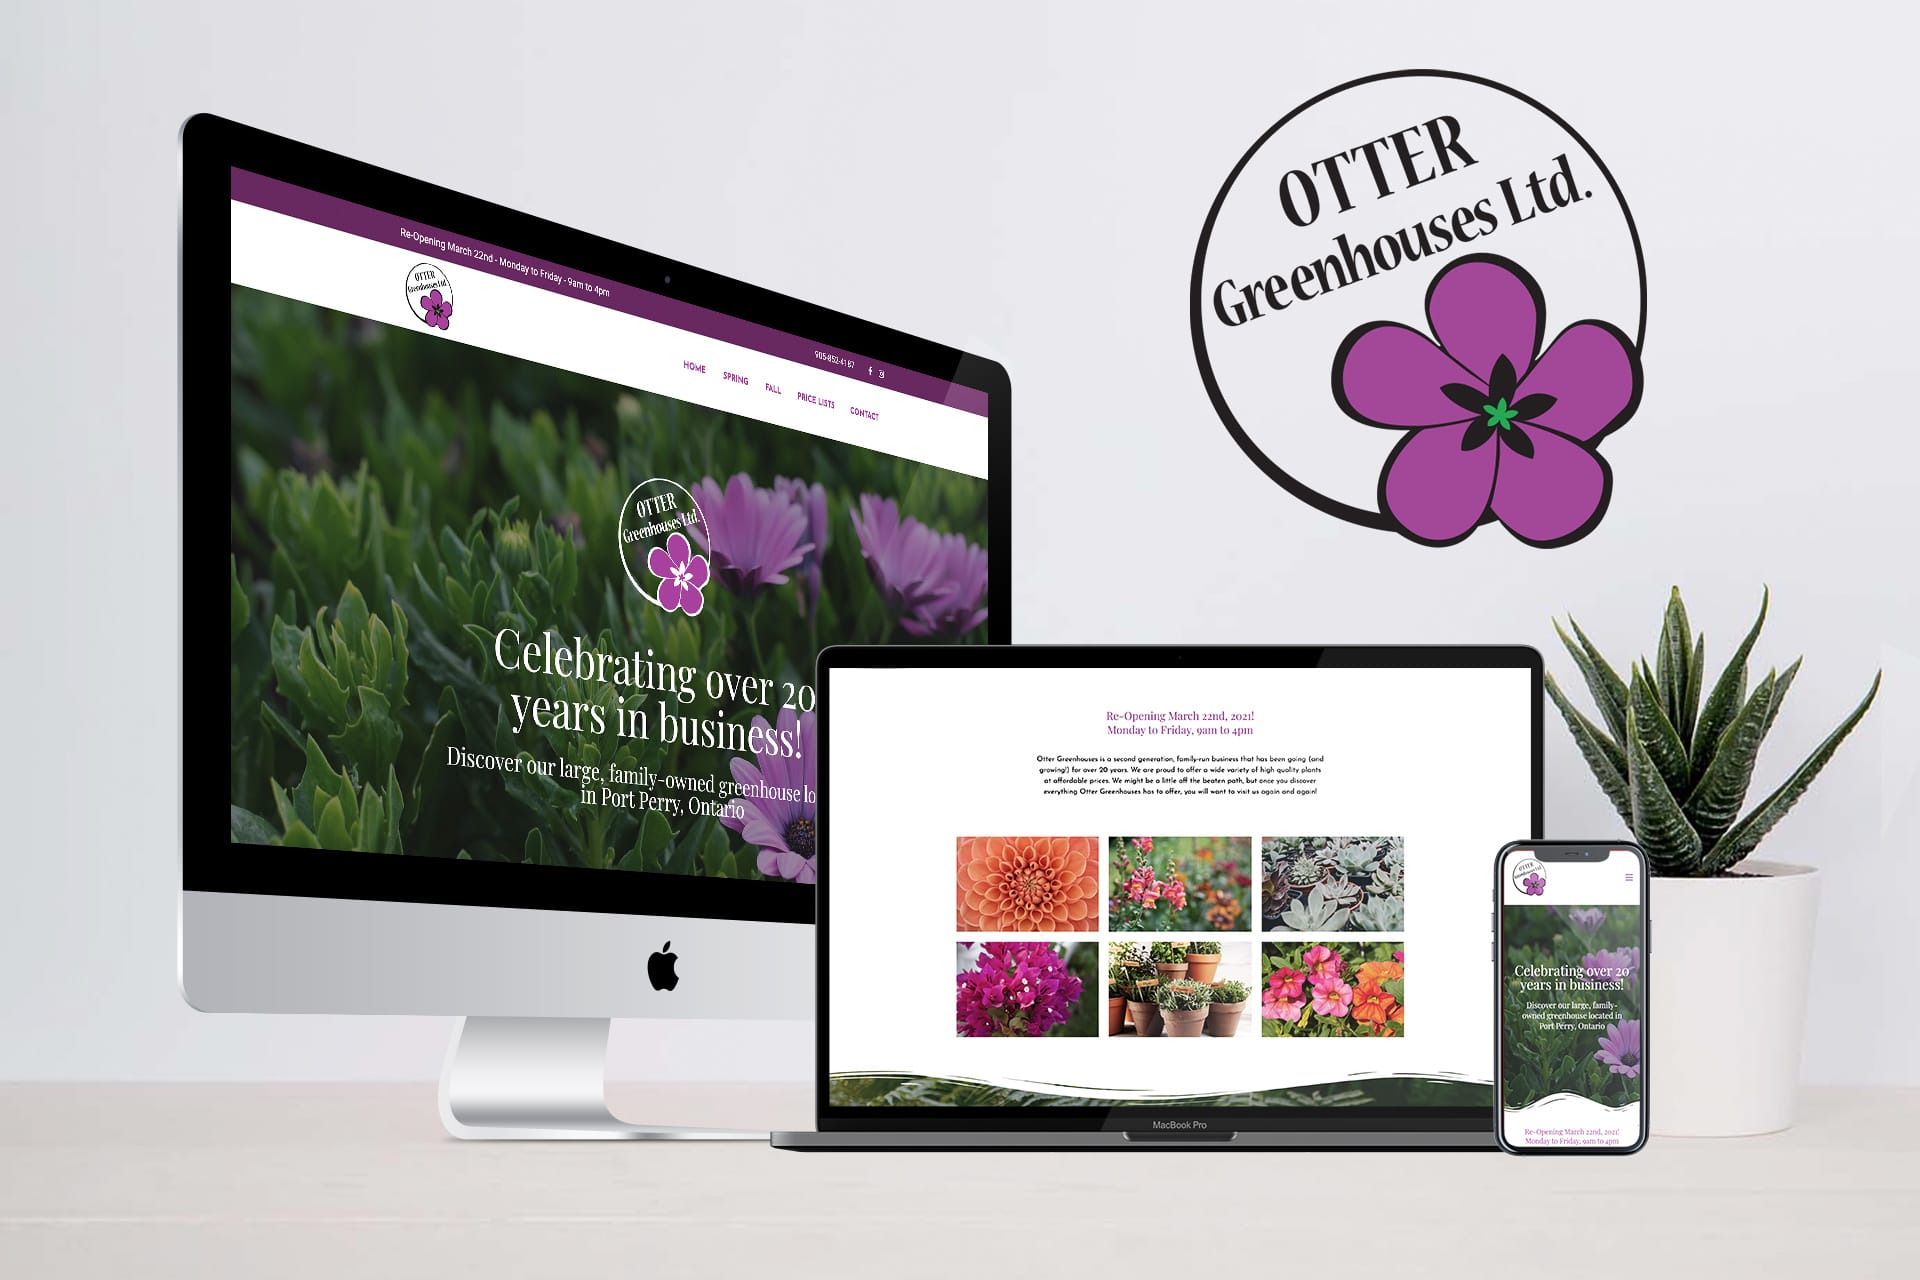 otter-greenhouses-website-design